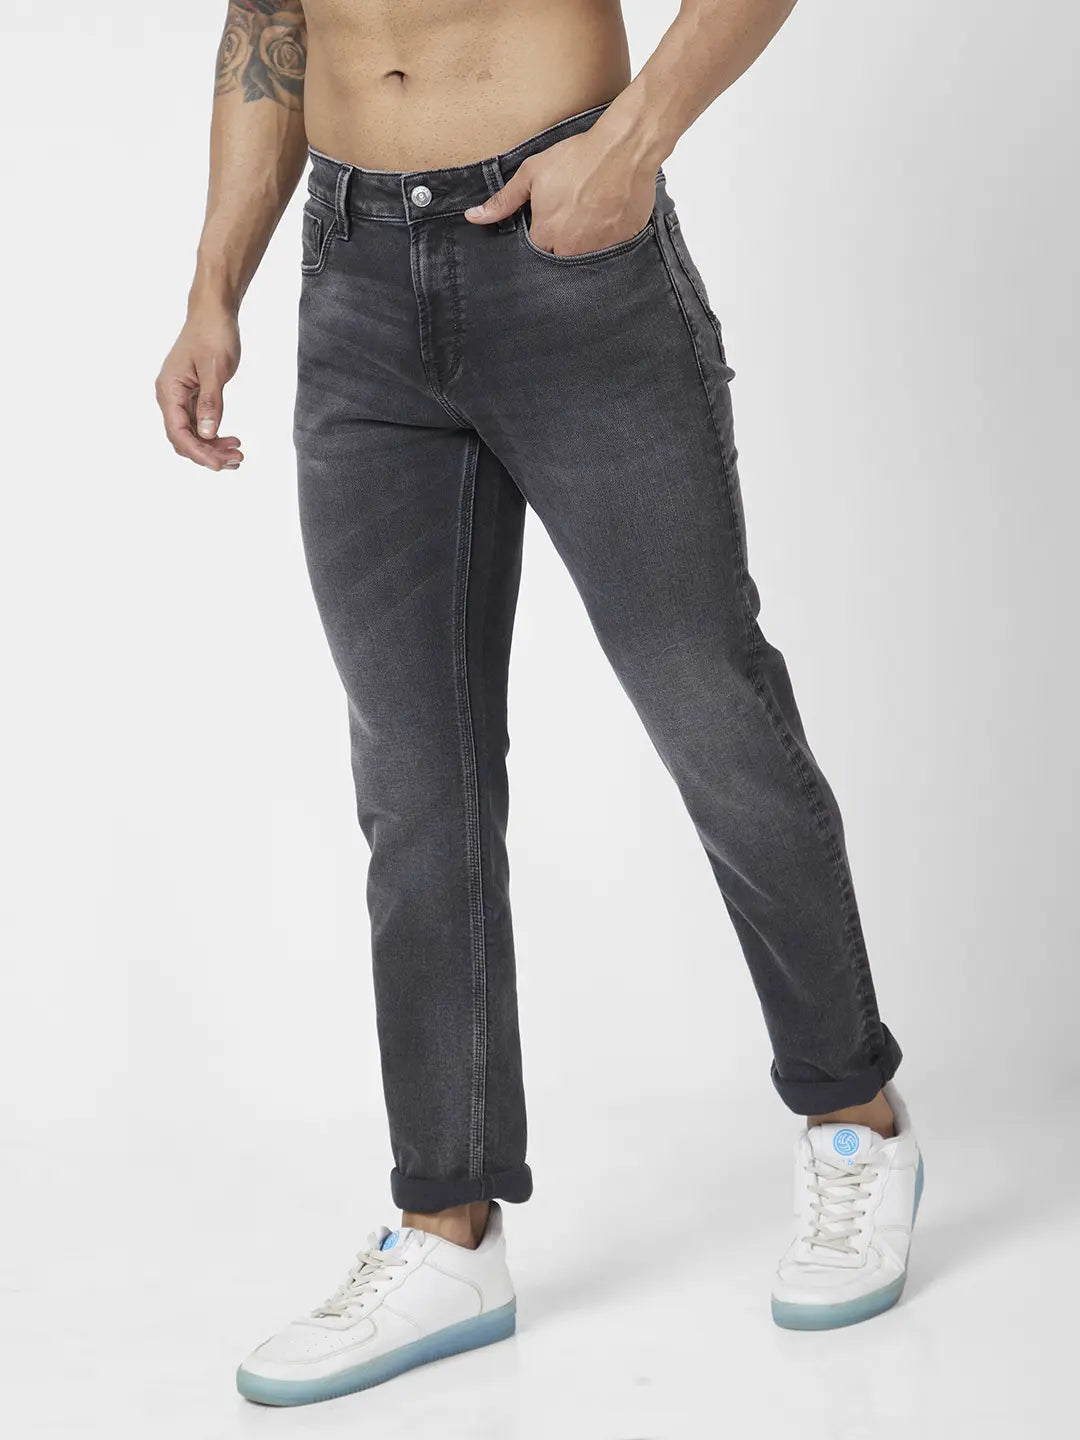 Spykar Men Carbon Black Cotton Stretch Comfort Fit Straigth Length Clean Look Mid Rise Jeans (Ricardo)